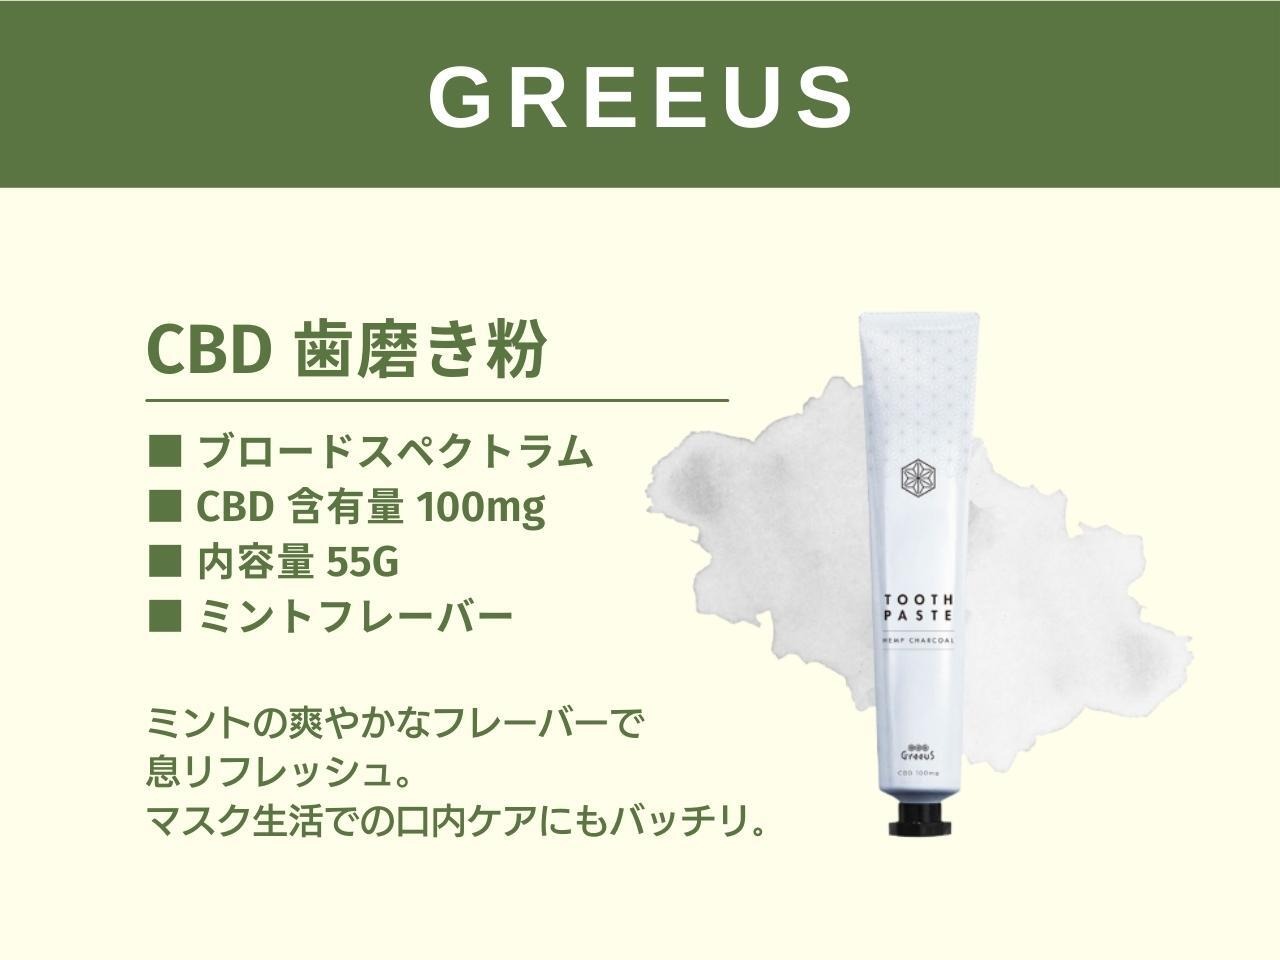 GREEUS CBD 歯磨き粉